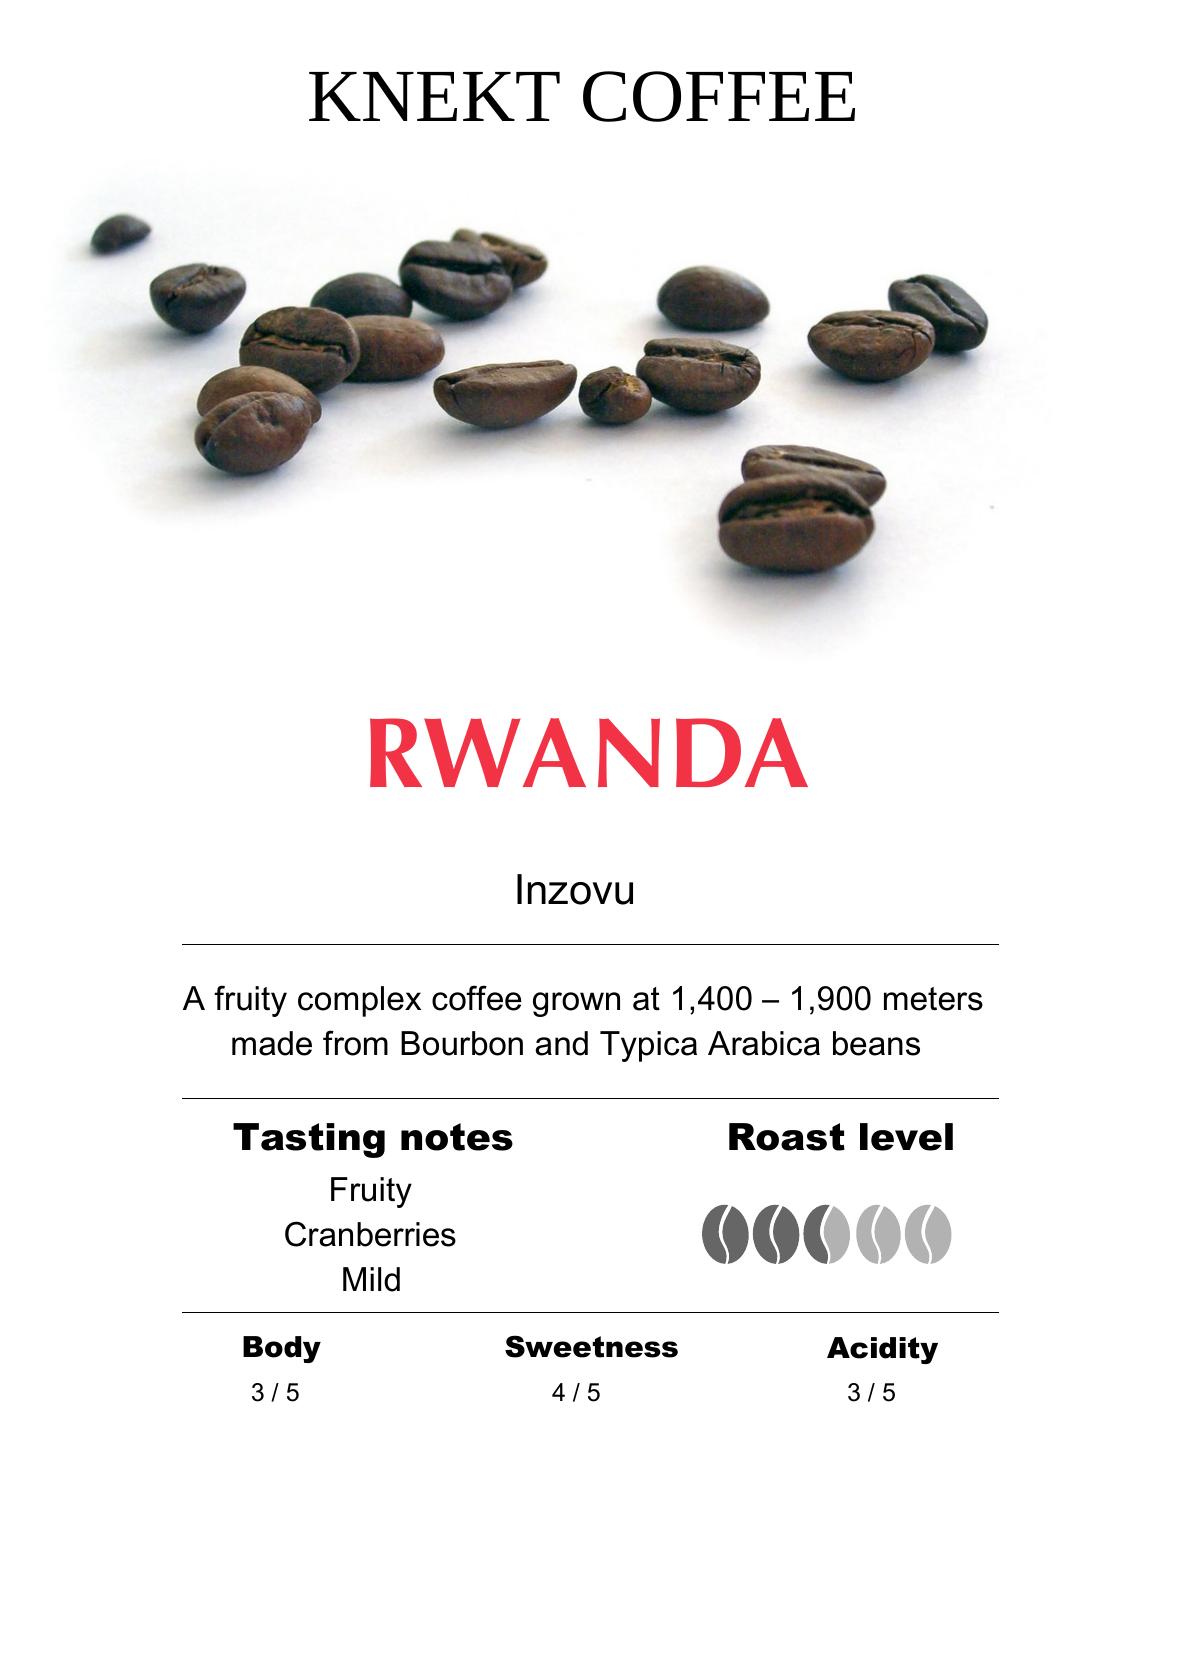 RWANDA - KNEKT COFFEE